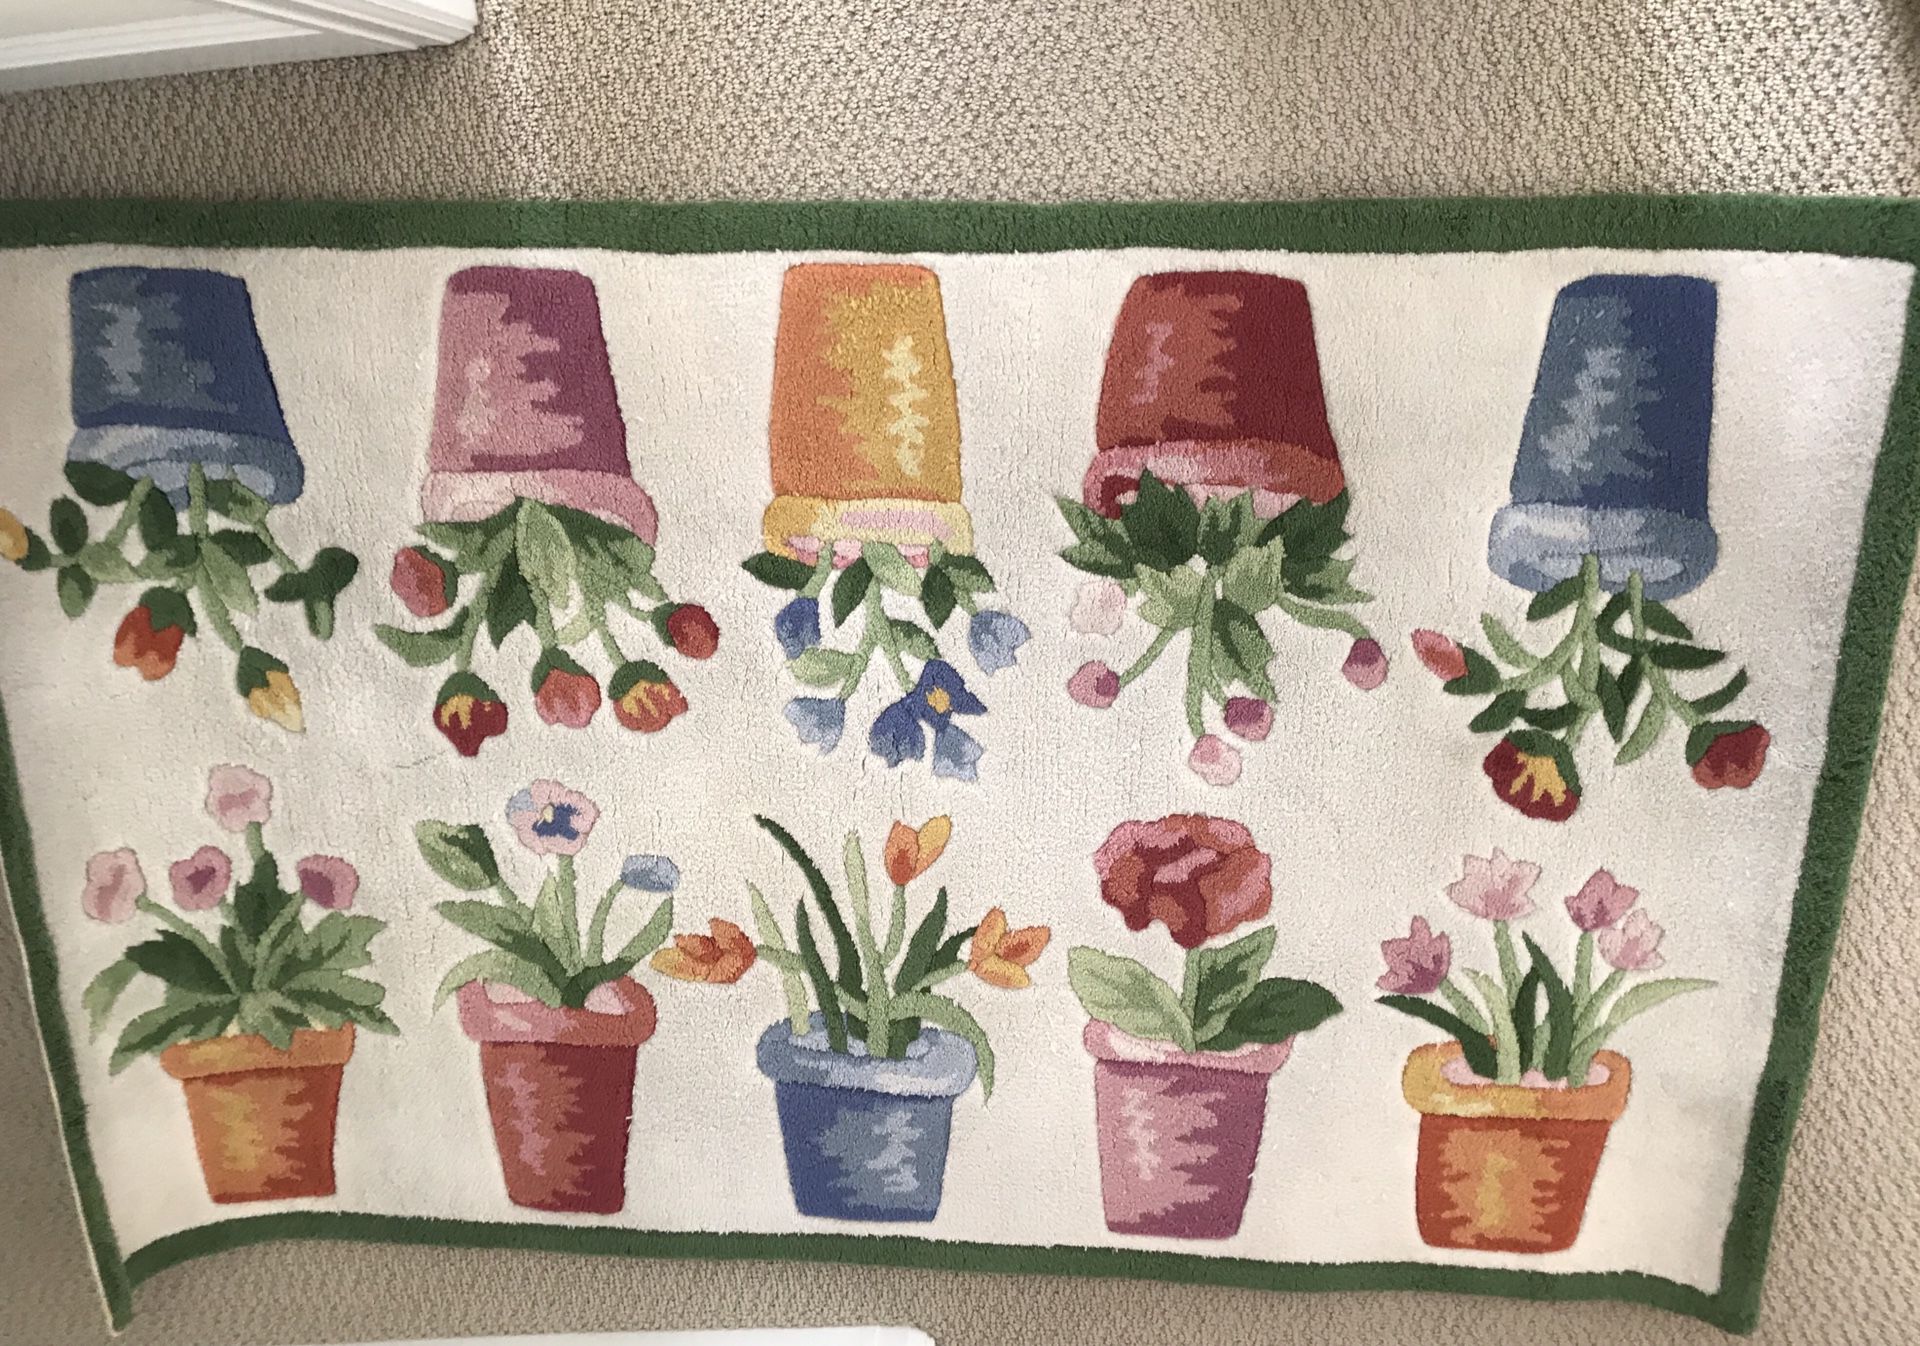 34” x 59” rug with flower pot design